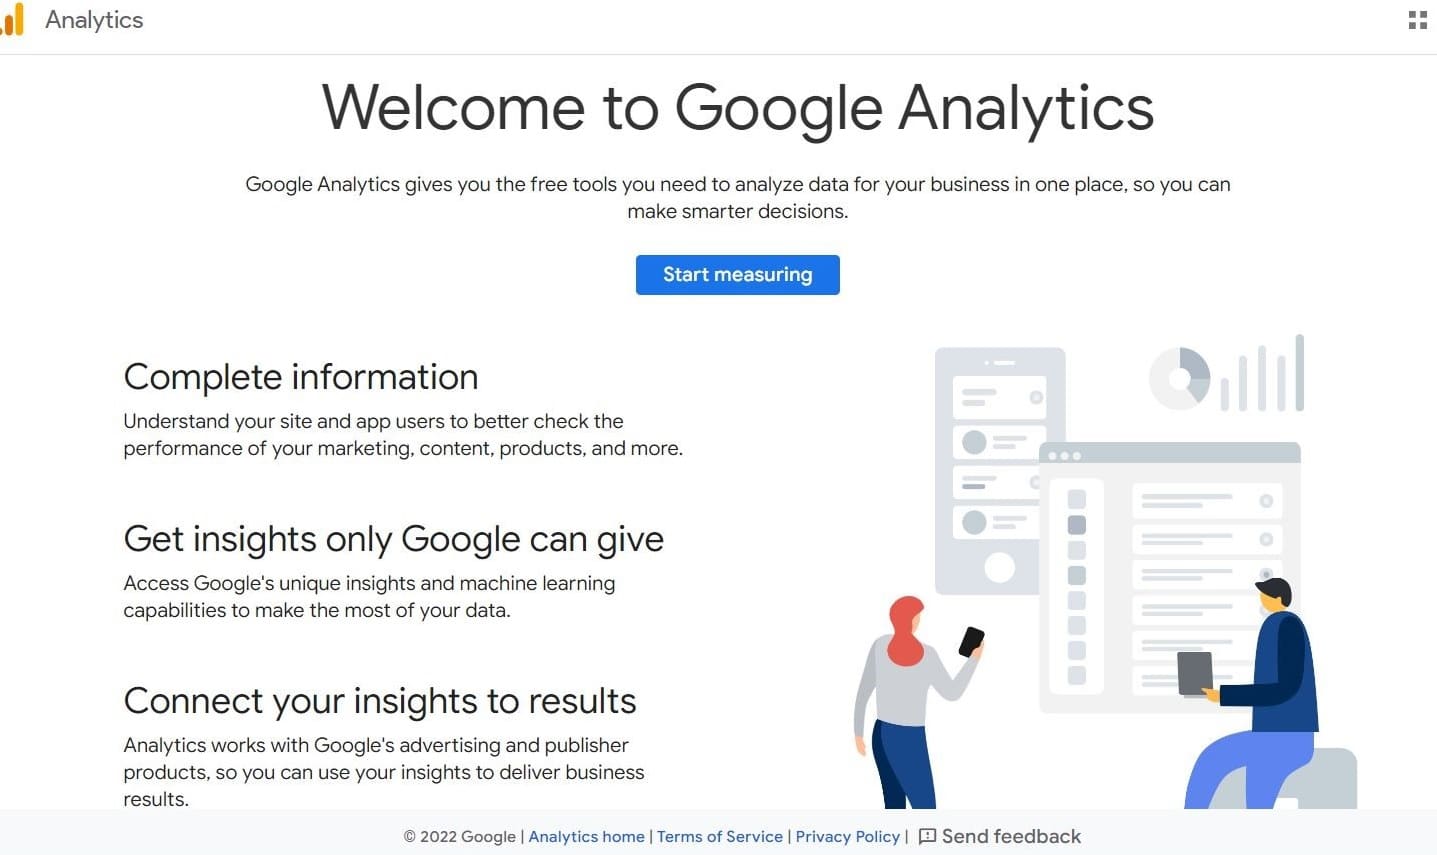 De startpagina van Google Analytics met de categorieën"Complete information," "Get insights only Google can give," en"Connect your insights to results".